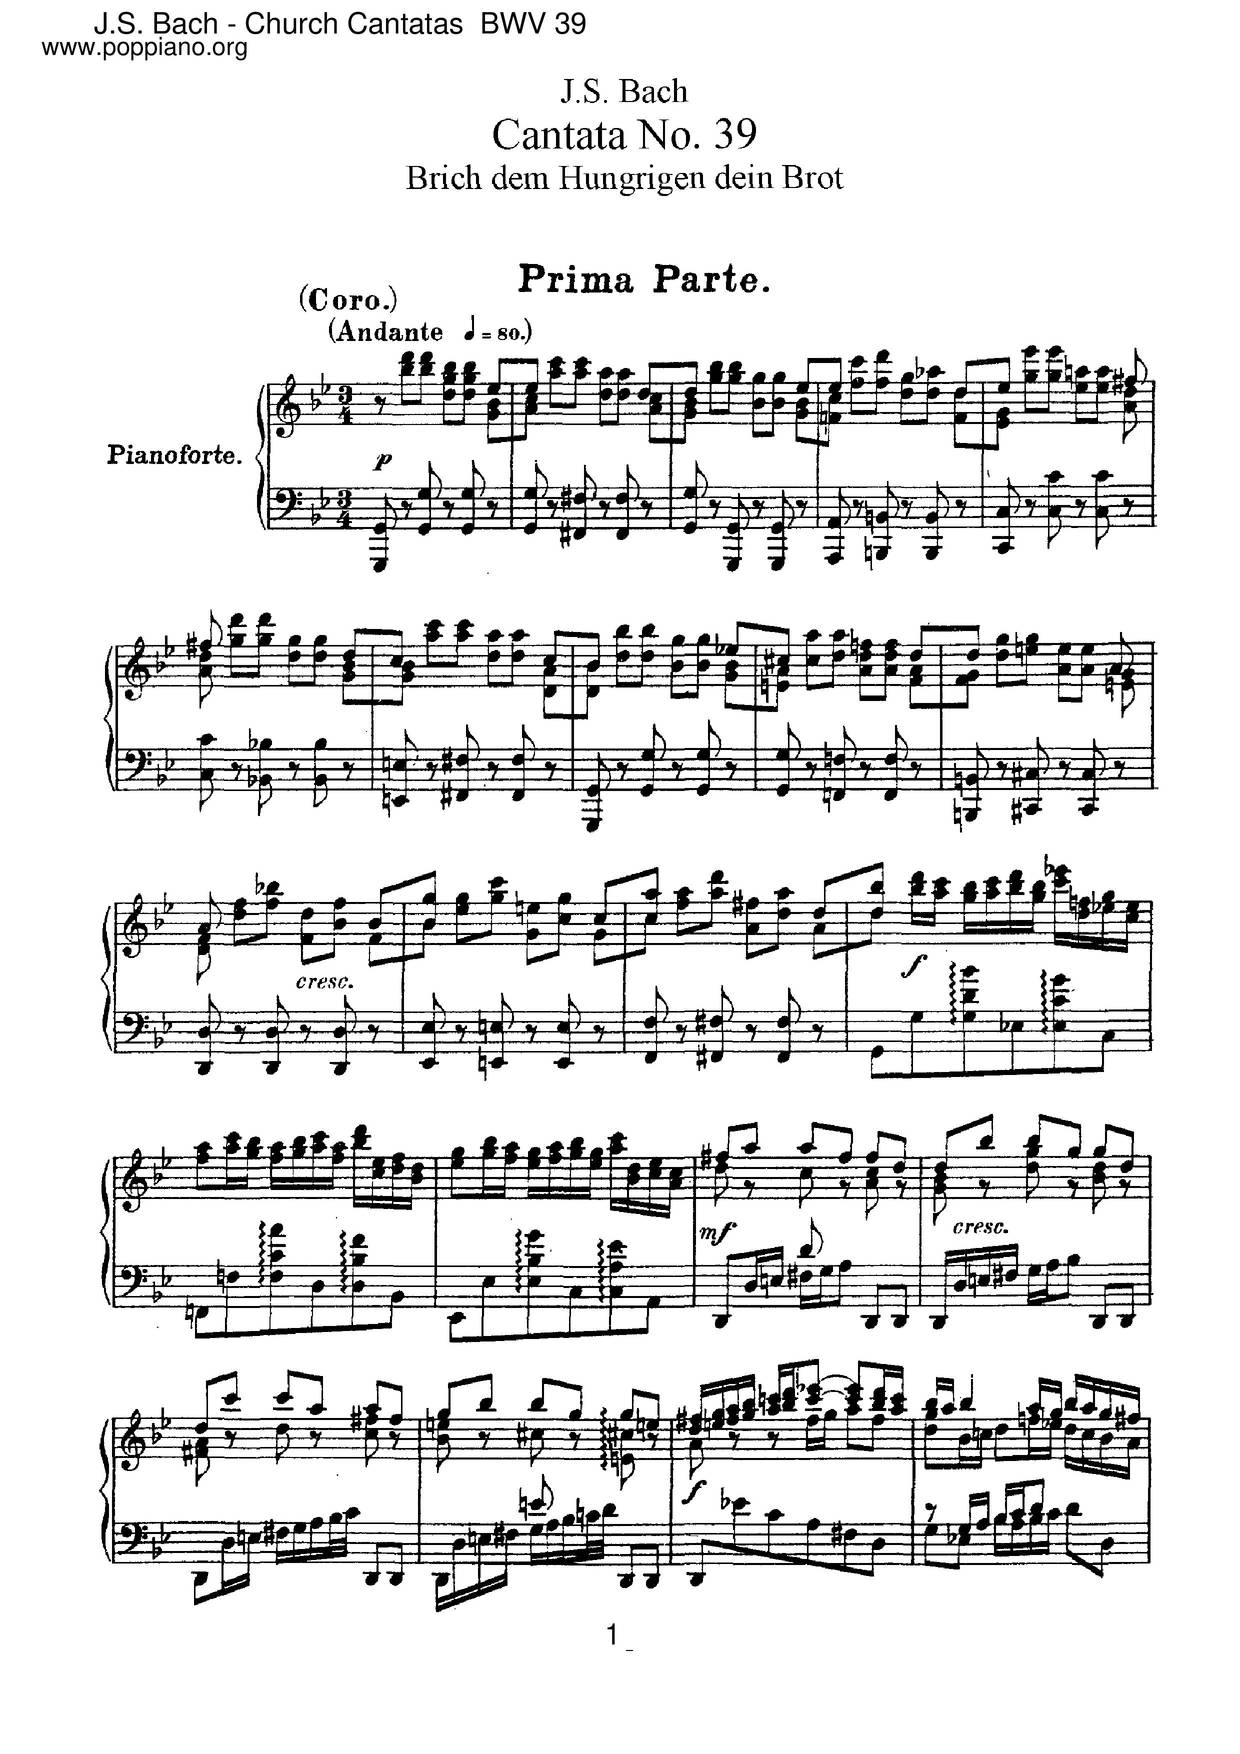 Brich Dem Hungrigen Dein Brot, BWV 39 Score